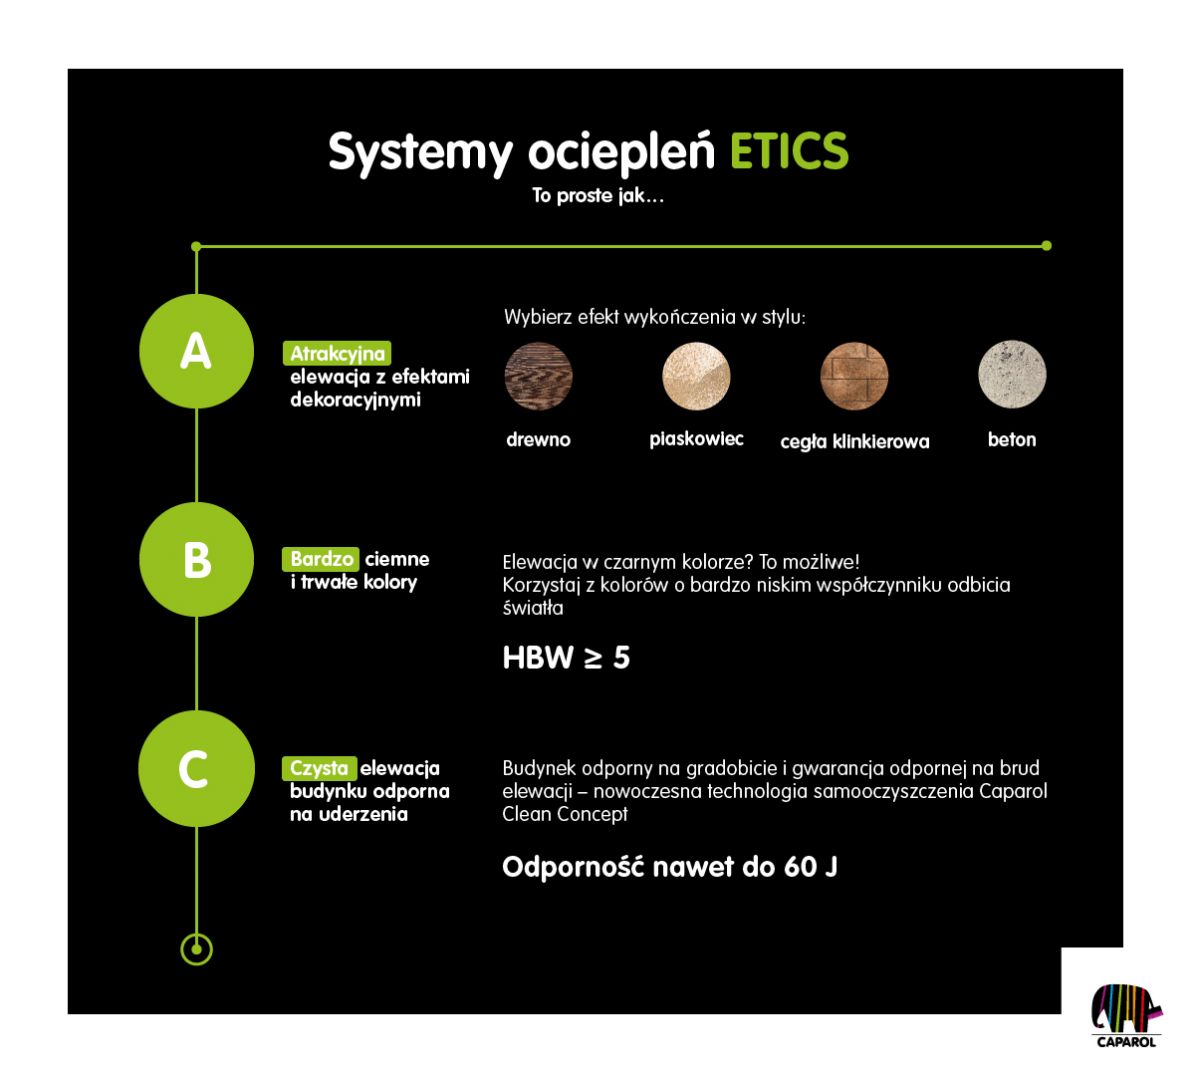 Systemy ociepleń ETICS. Fot. Caparol